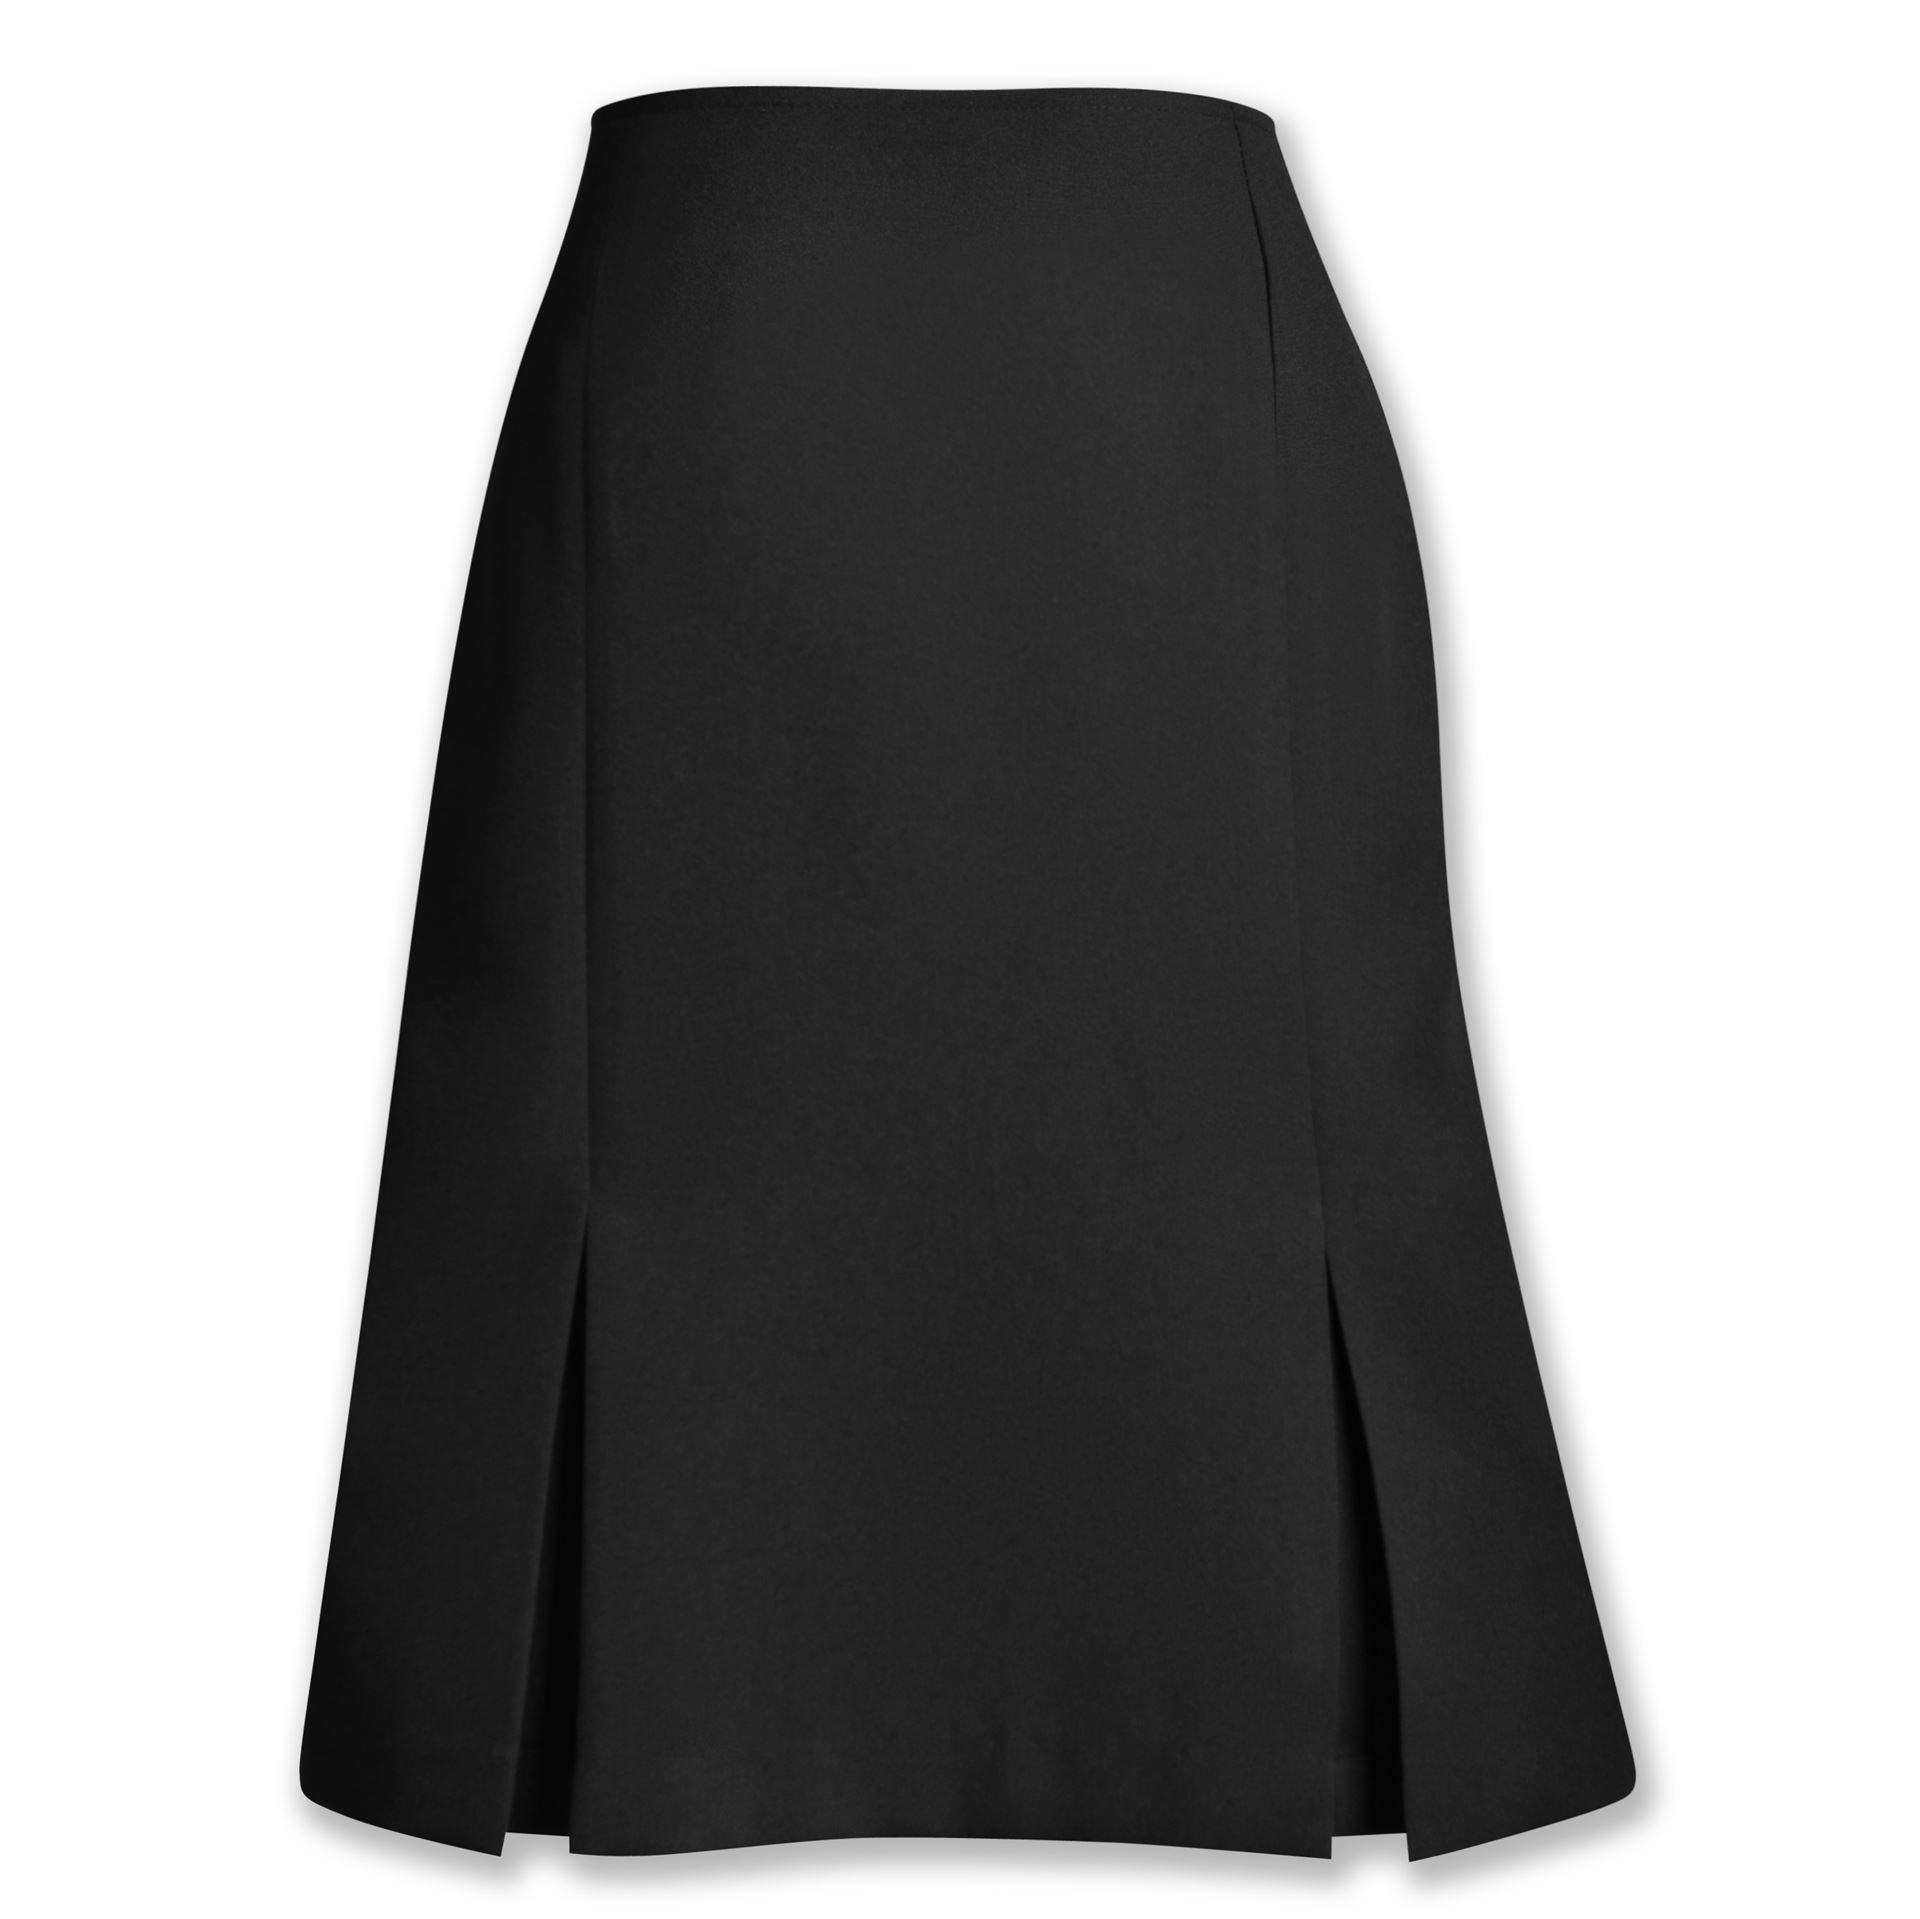 Lize Skirt - 60cm - Avail in: Black, Navy, Charcoal Melange